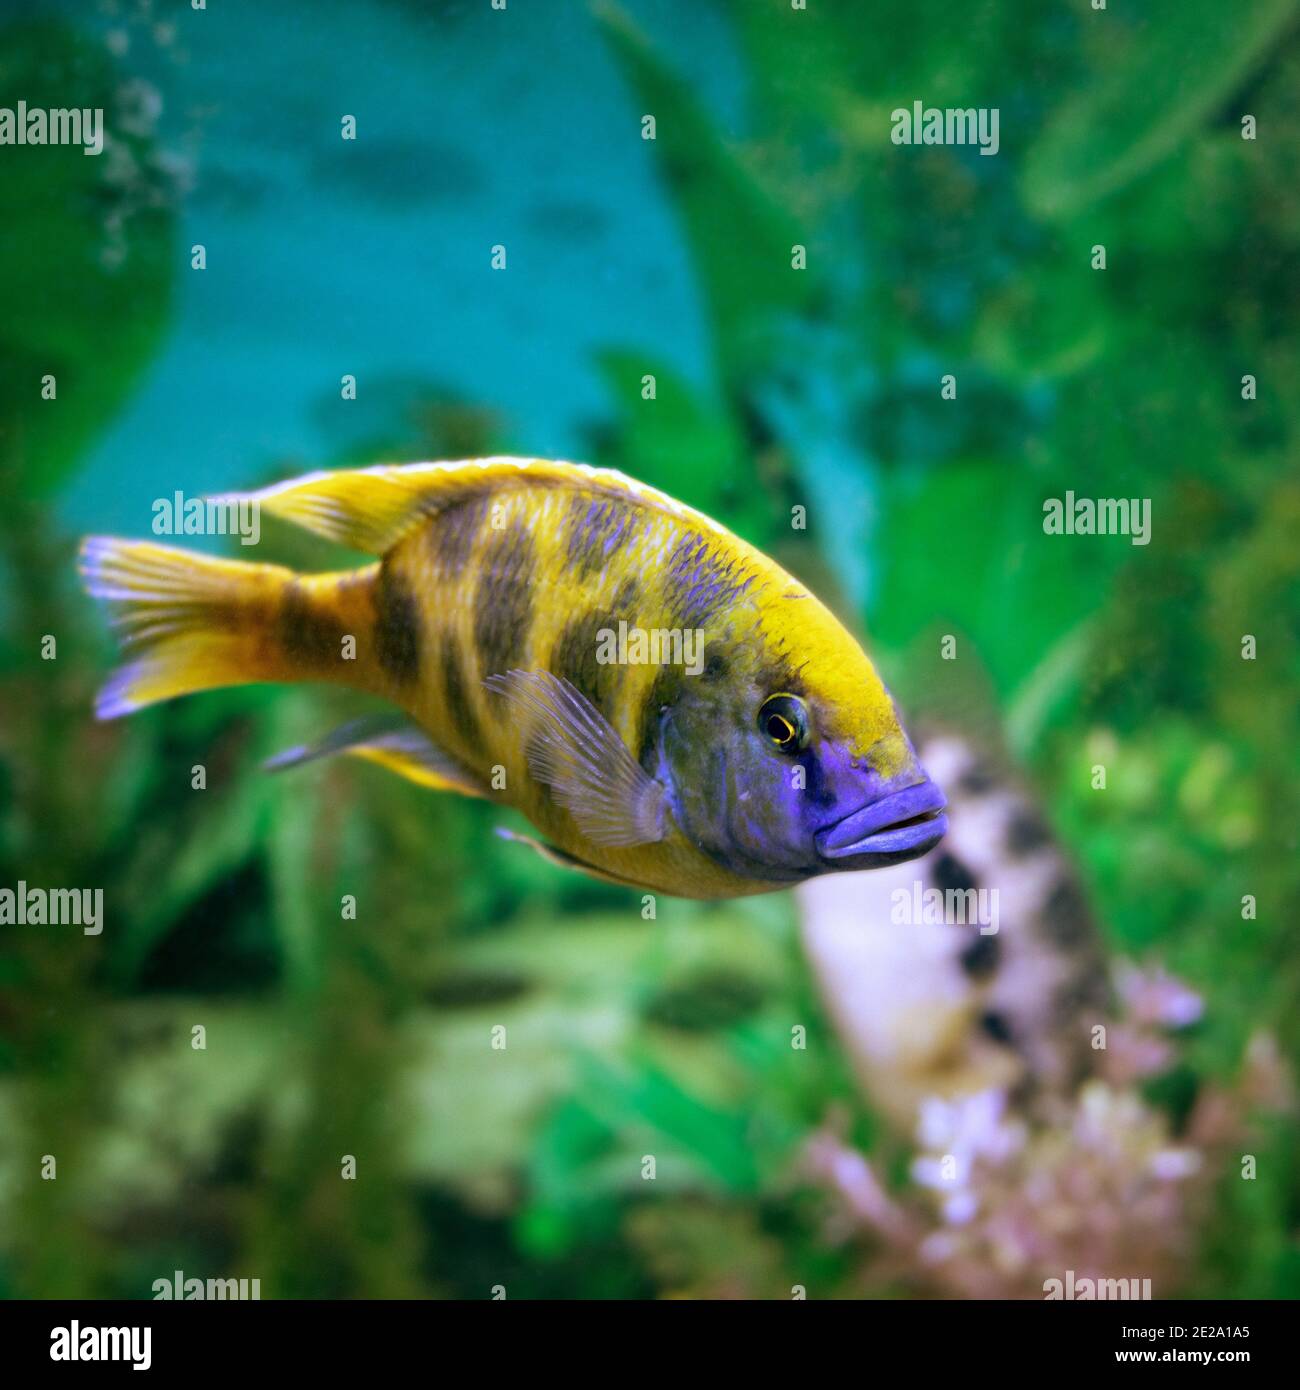 Cichlid golden leopard fish or Haplochromis venustus in aquarium with blurred background Stock Photo